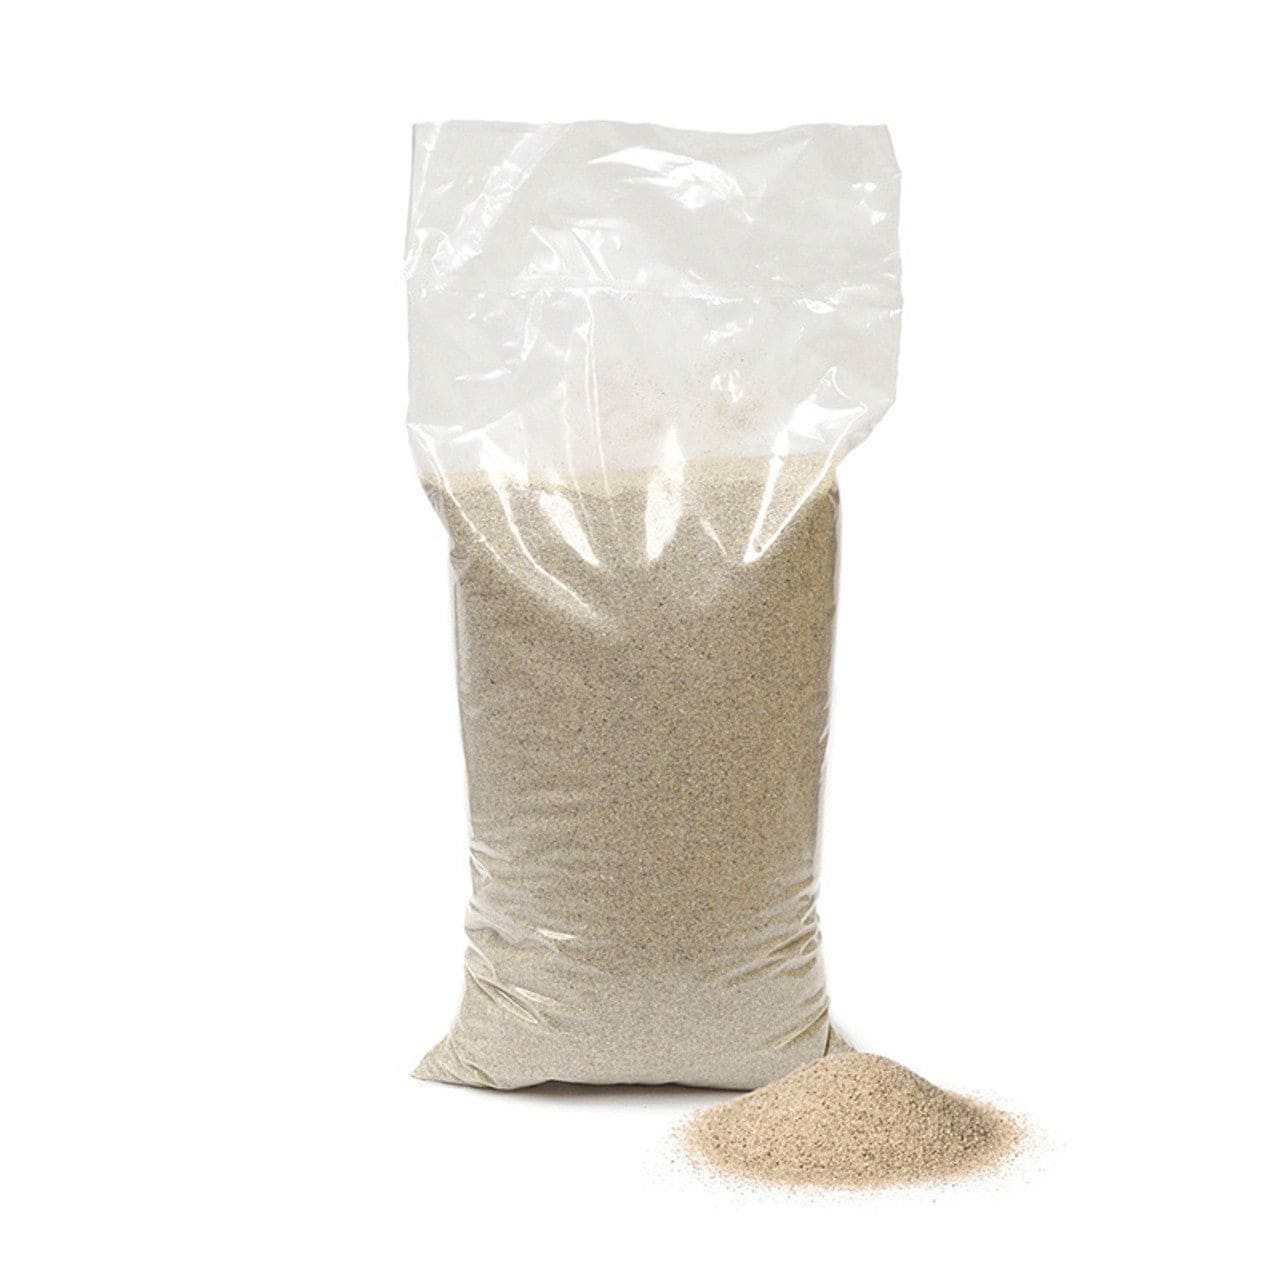 Case of 6 x 10lb Bags - Ventis Gas Log Select White Sand - BMN-10-6 - Chimney Cricket